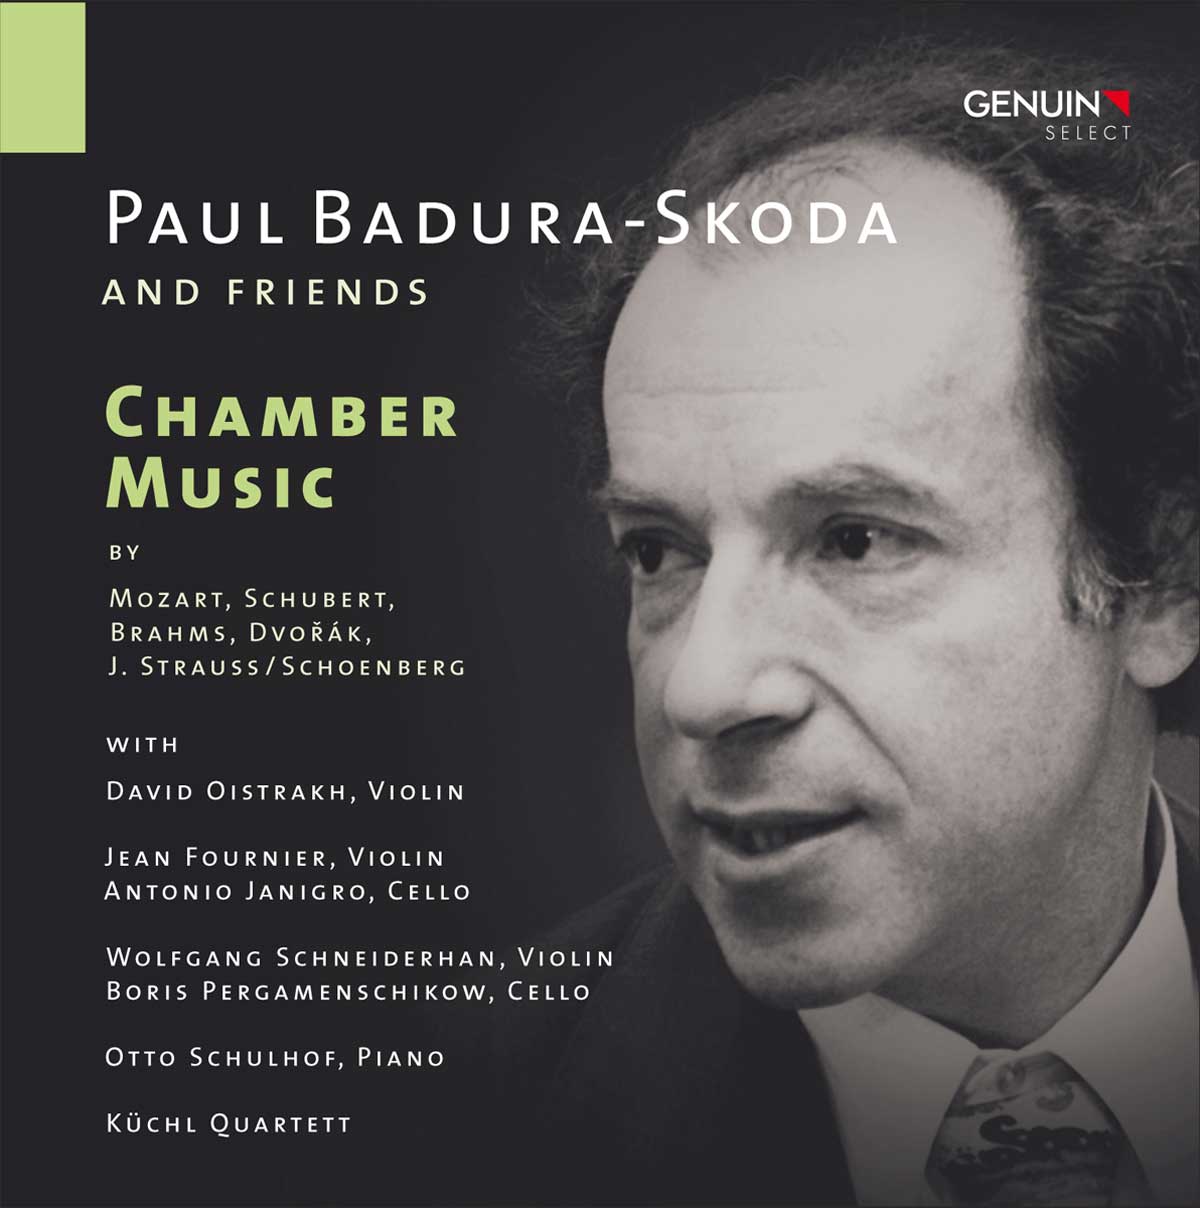 CD album cover 'Paul Badura-Skoda and Friends' (GEN 11200) with Paul Badura-Skoda, David Oistrach, Jean Fournier ...